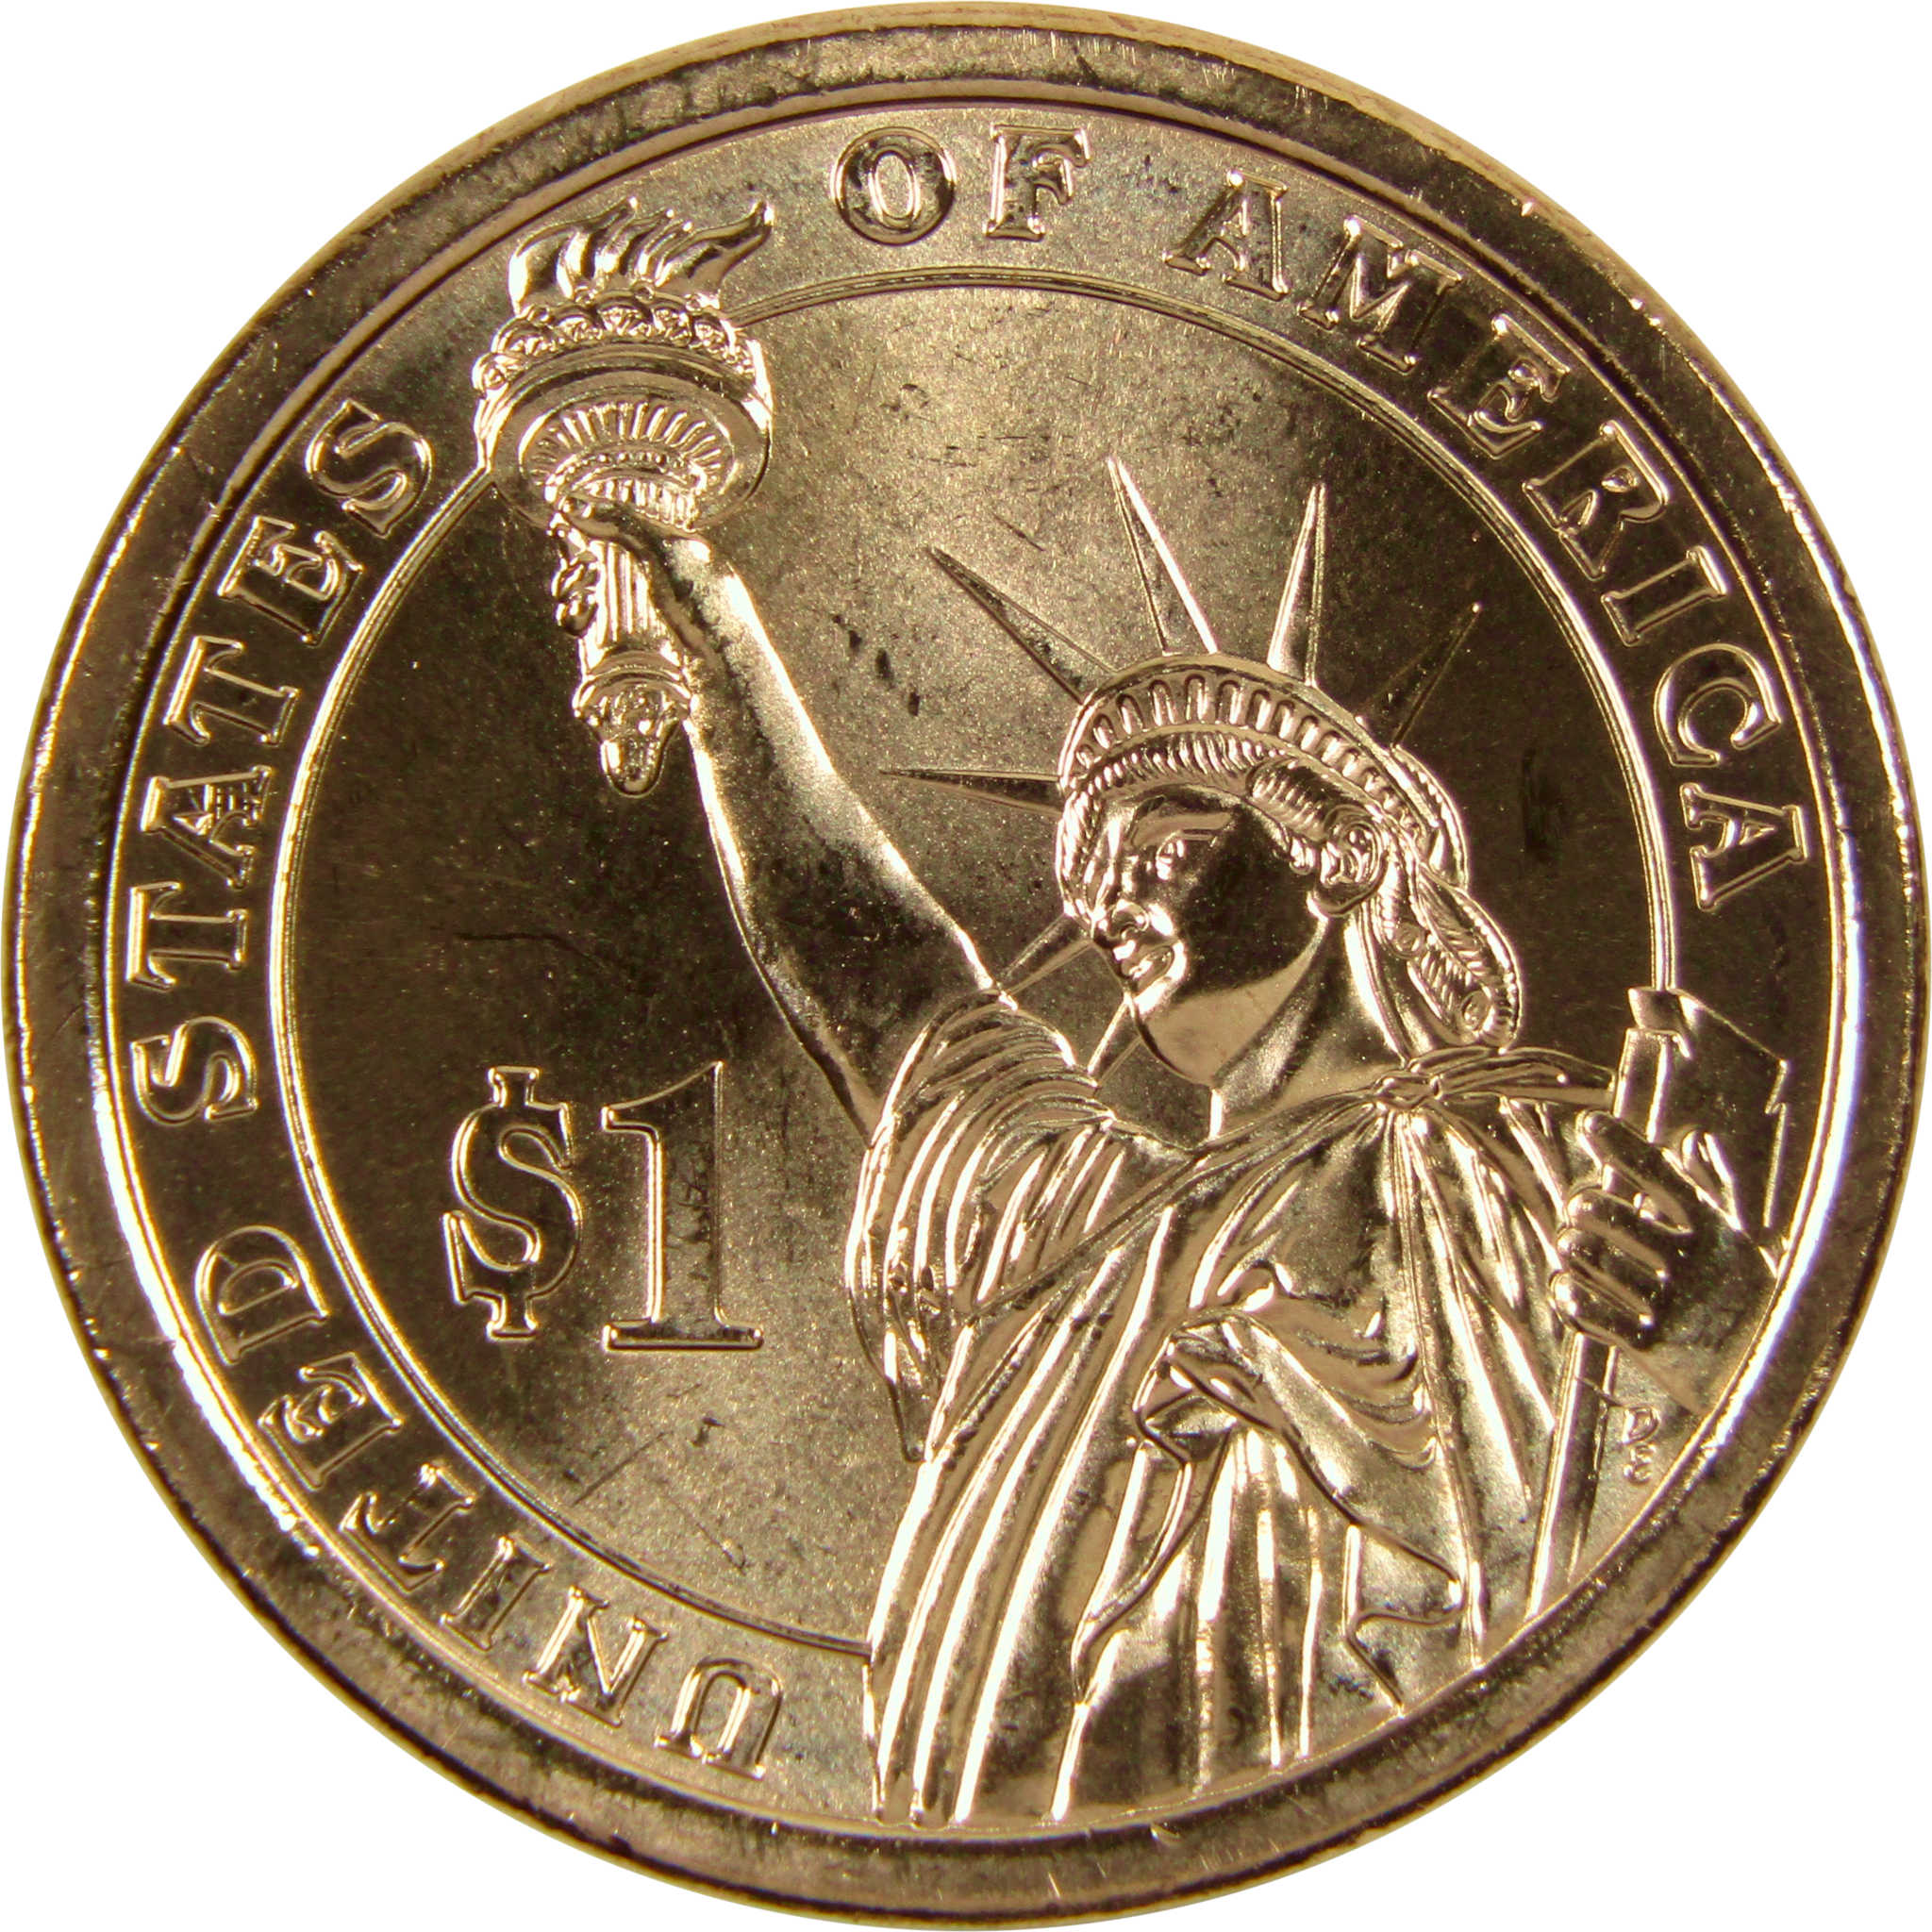 2011 D James A Garfield Presidential Dollar BU Uncirculated $1 Coin